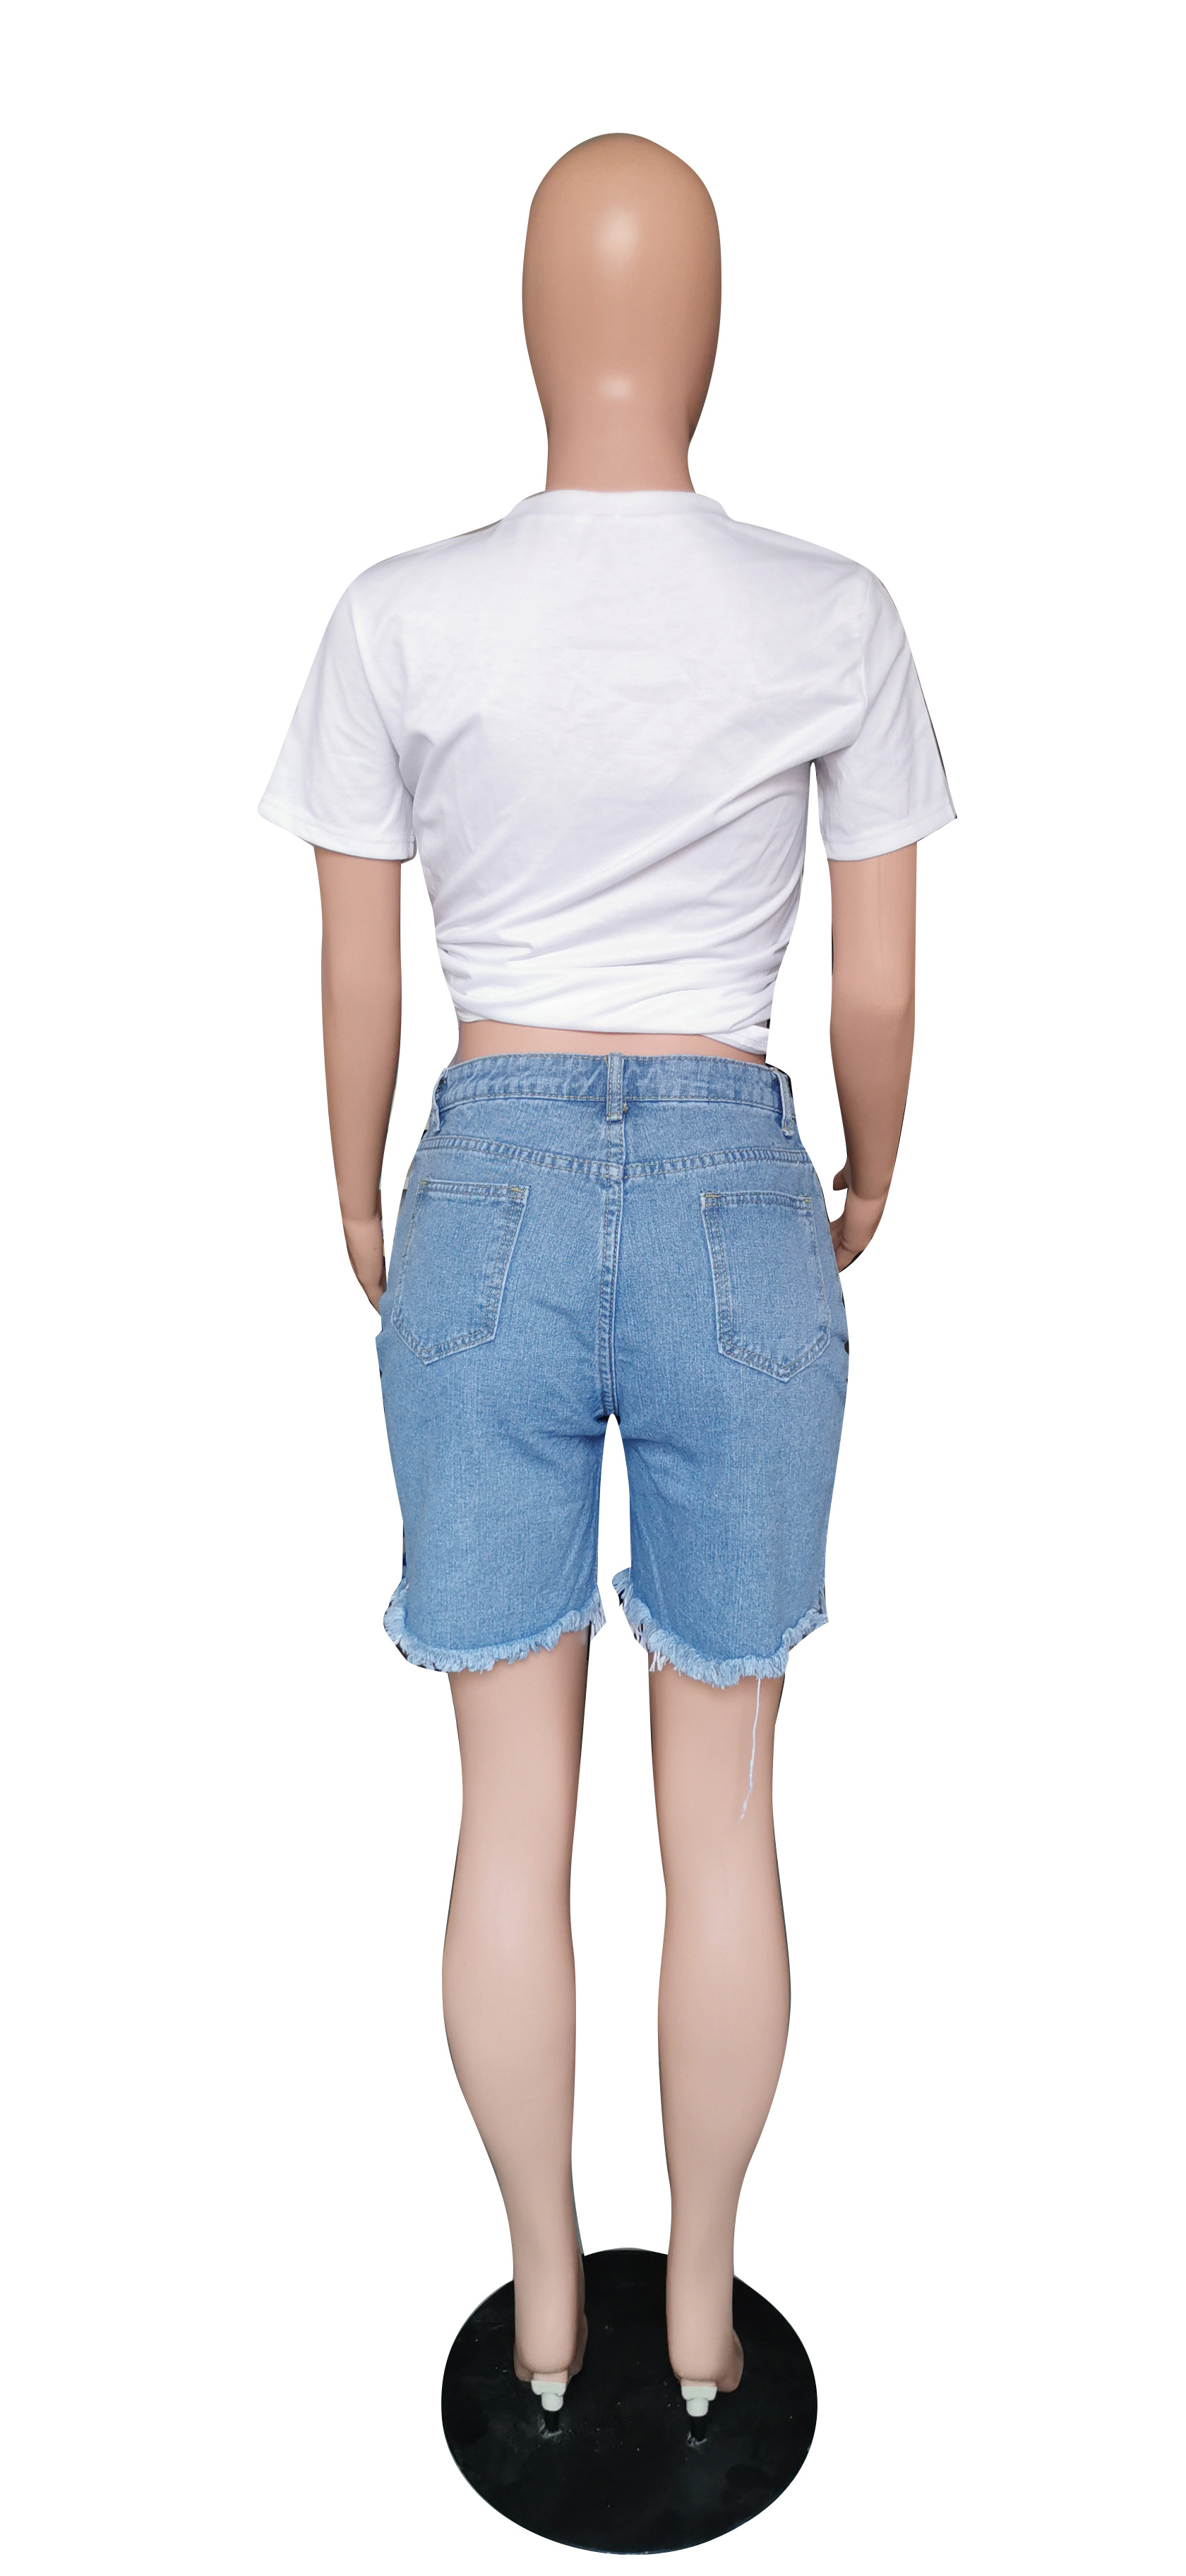 2021 New Summer High Waist Jeans Shorts Hollow OUt denim shorts women jeans Overall button Outfit Tassel Hole Shorts Plus XXXXXL